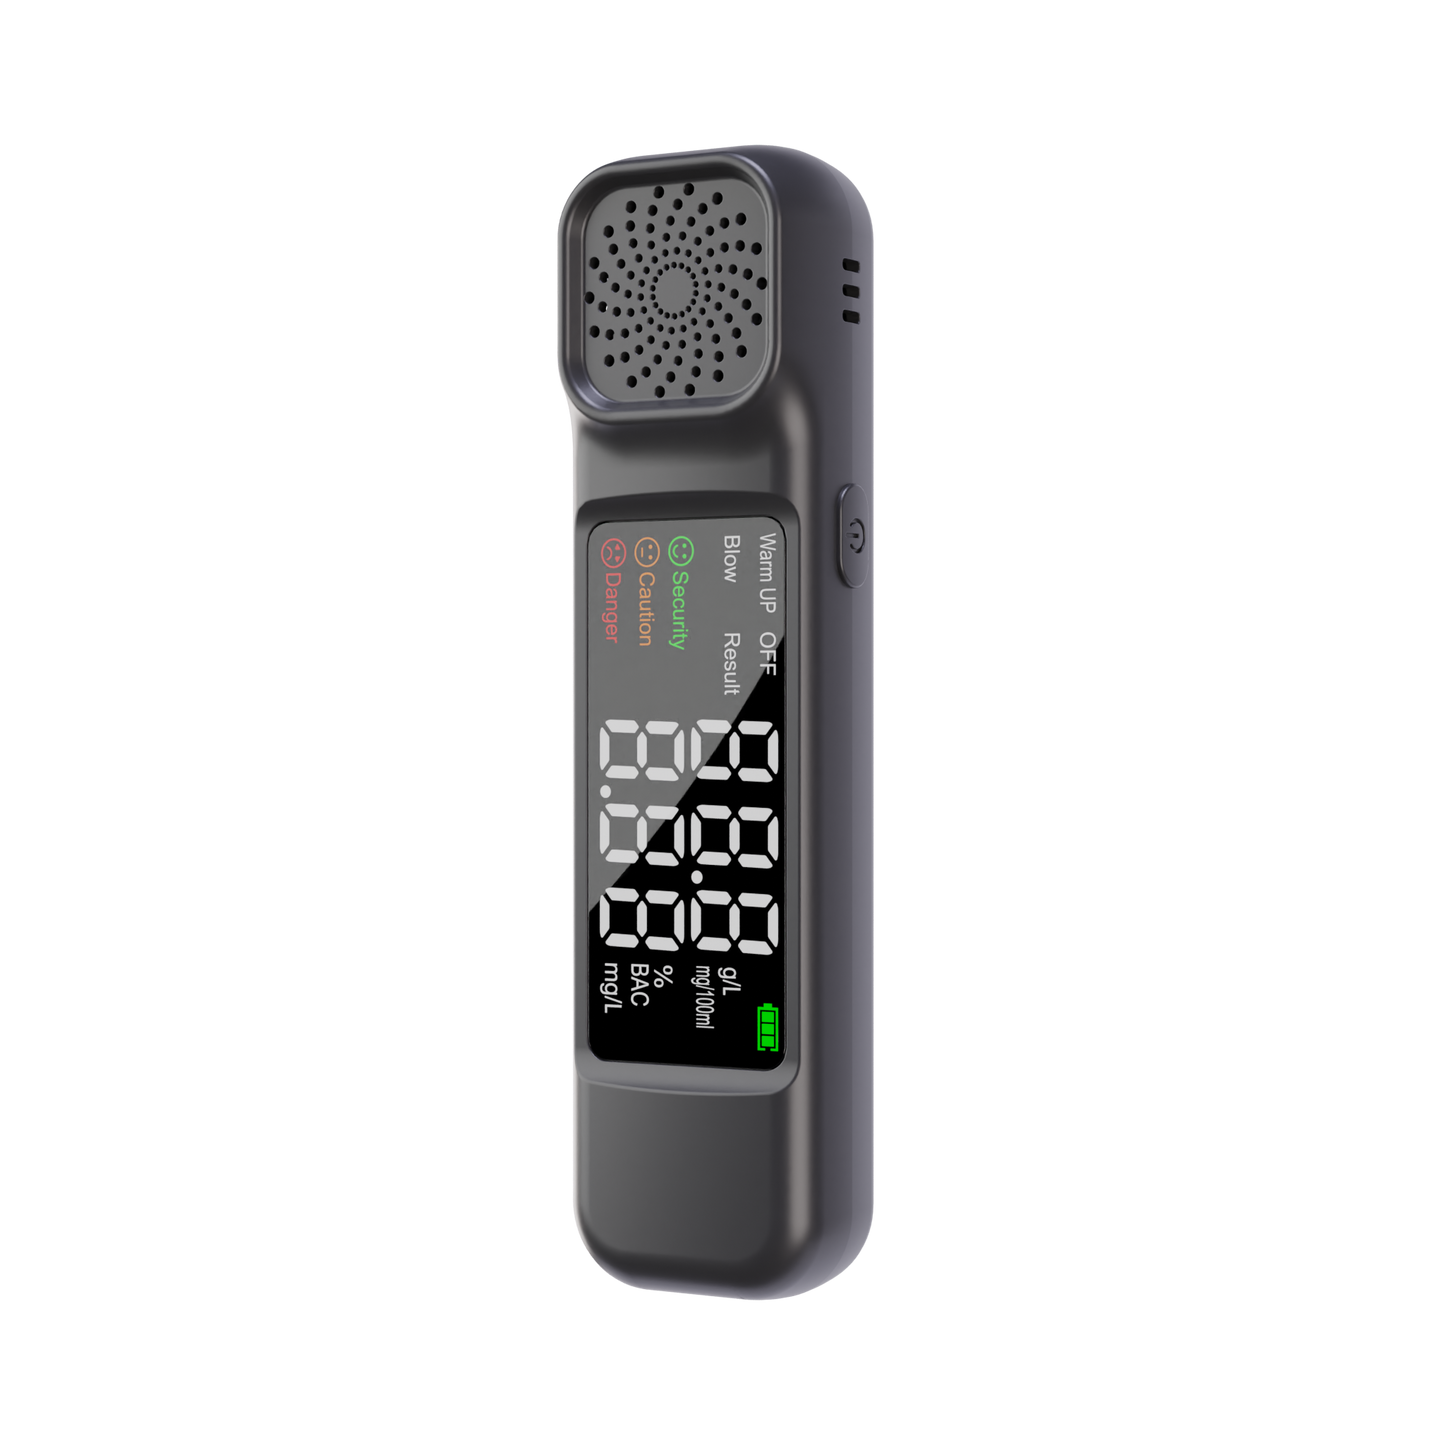 Best Selling portable handheld digital Alcohol detector Meter checker Breath Tester alcohol tester